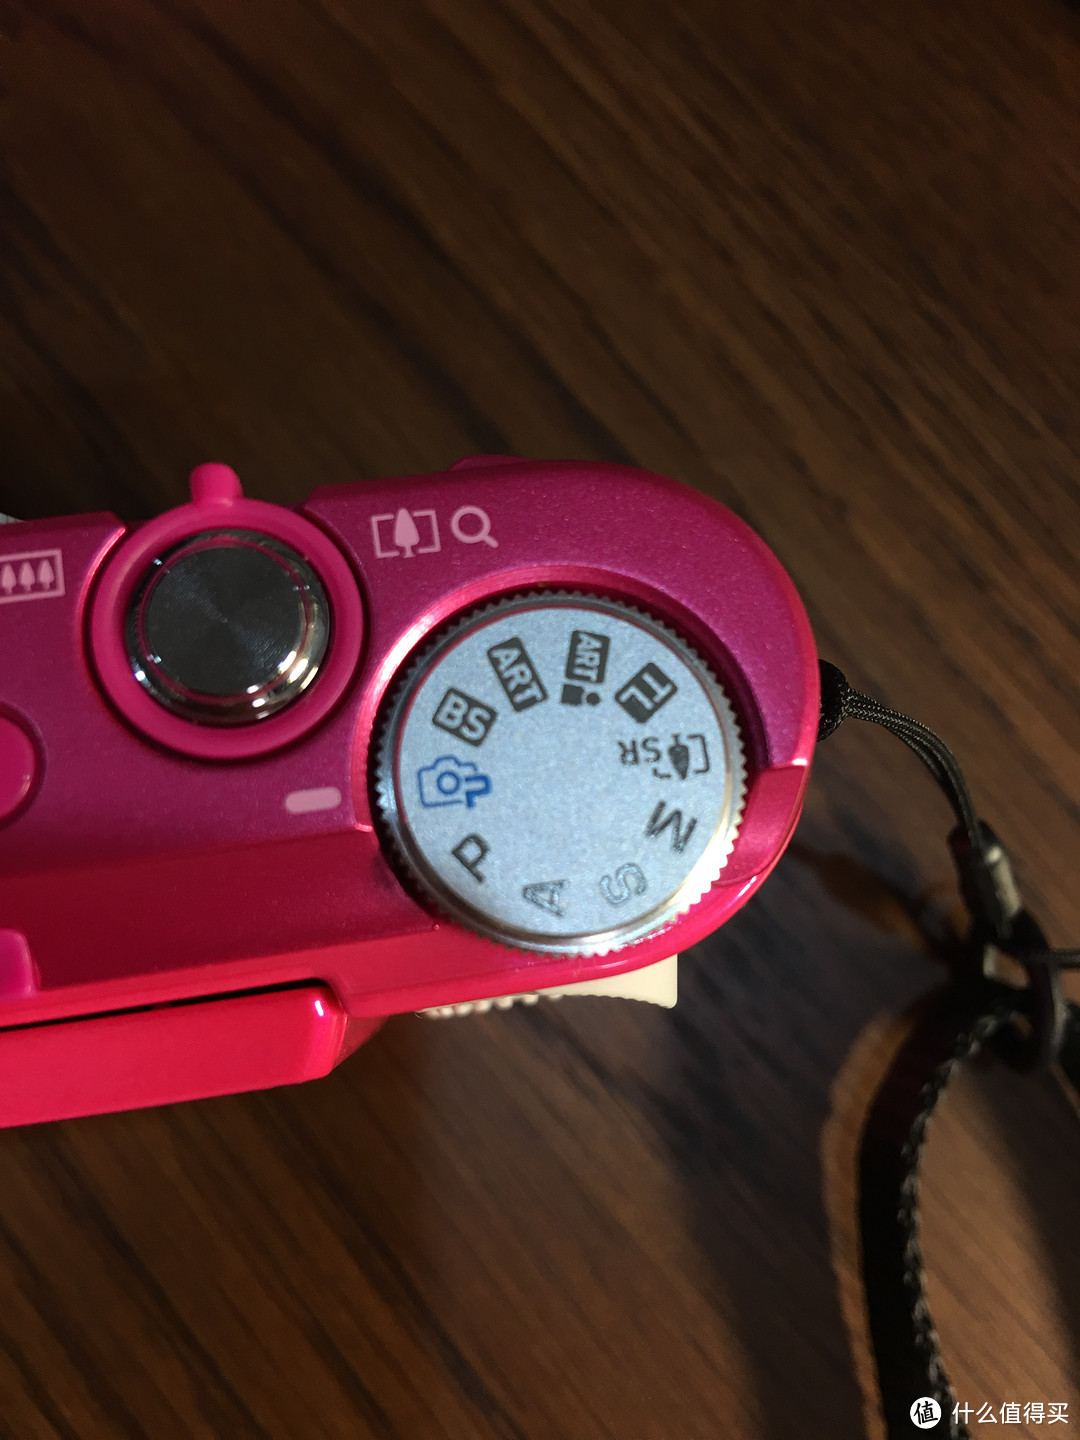 CASIO 卡西欧 ZR3600：入手美颜小相机，试拍街边小风景